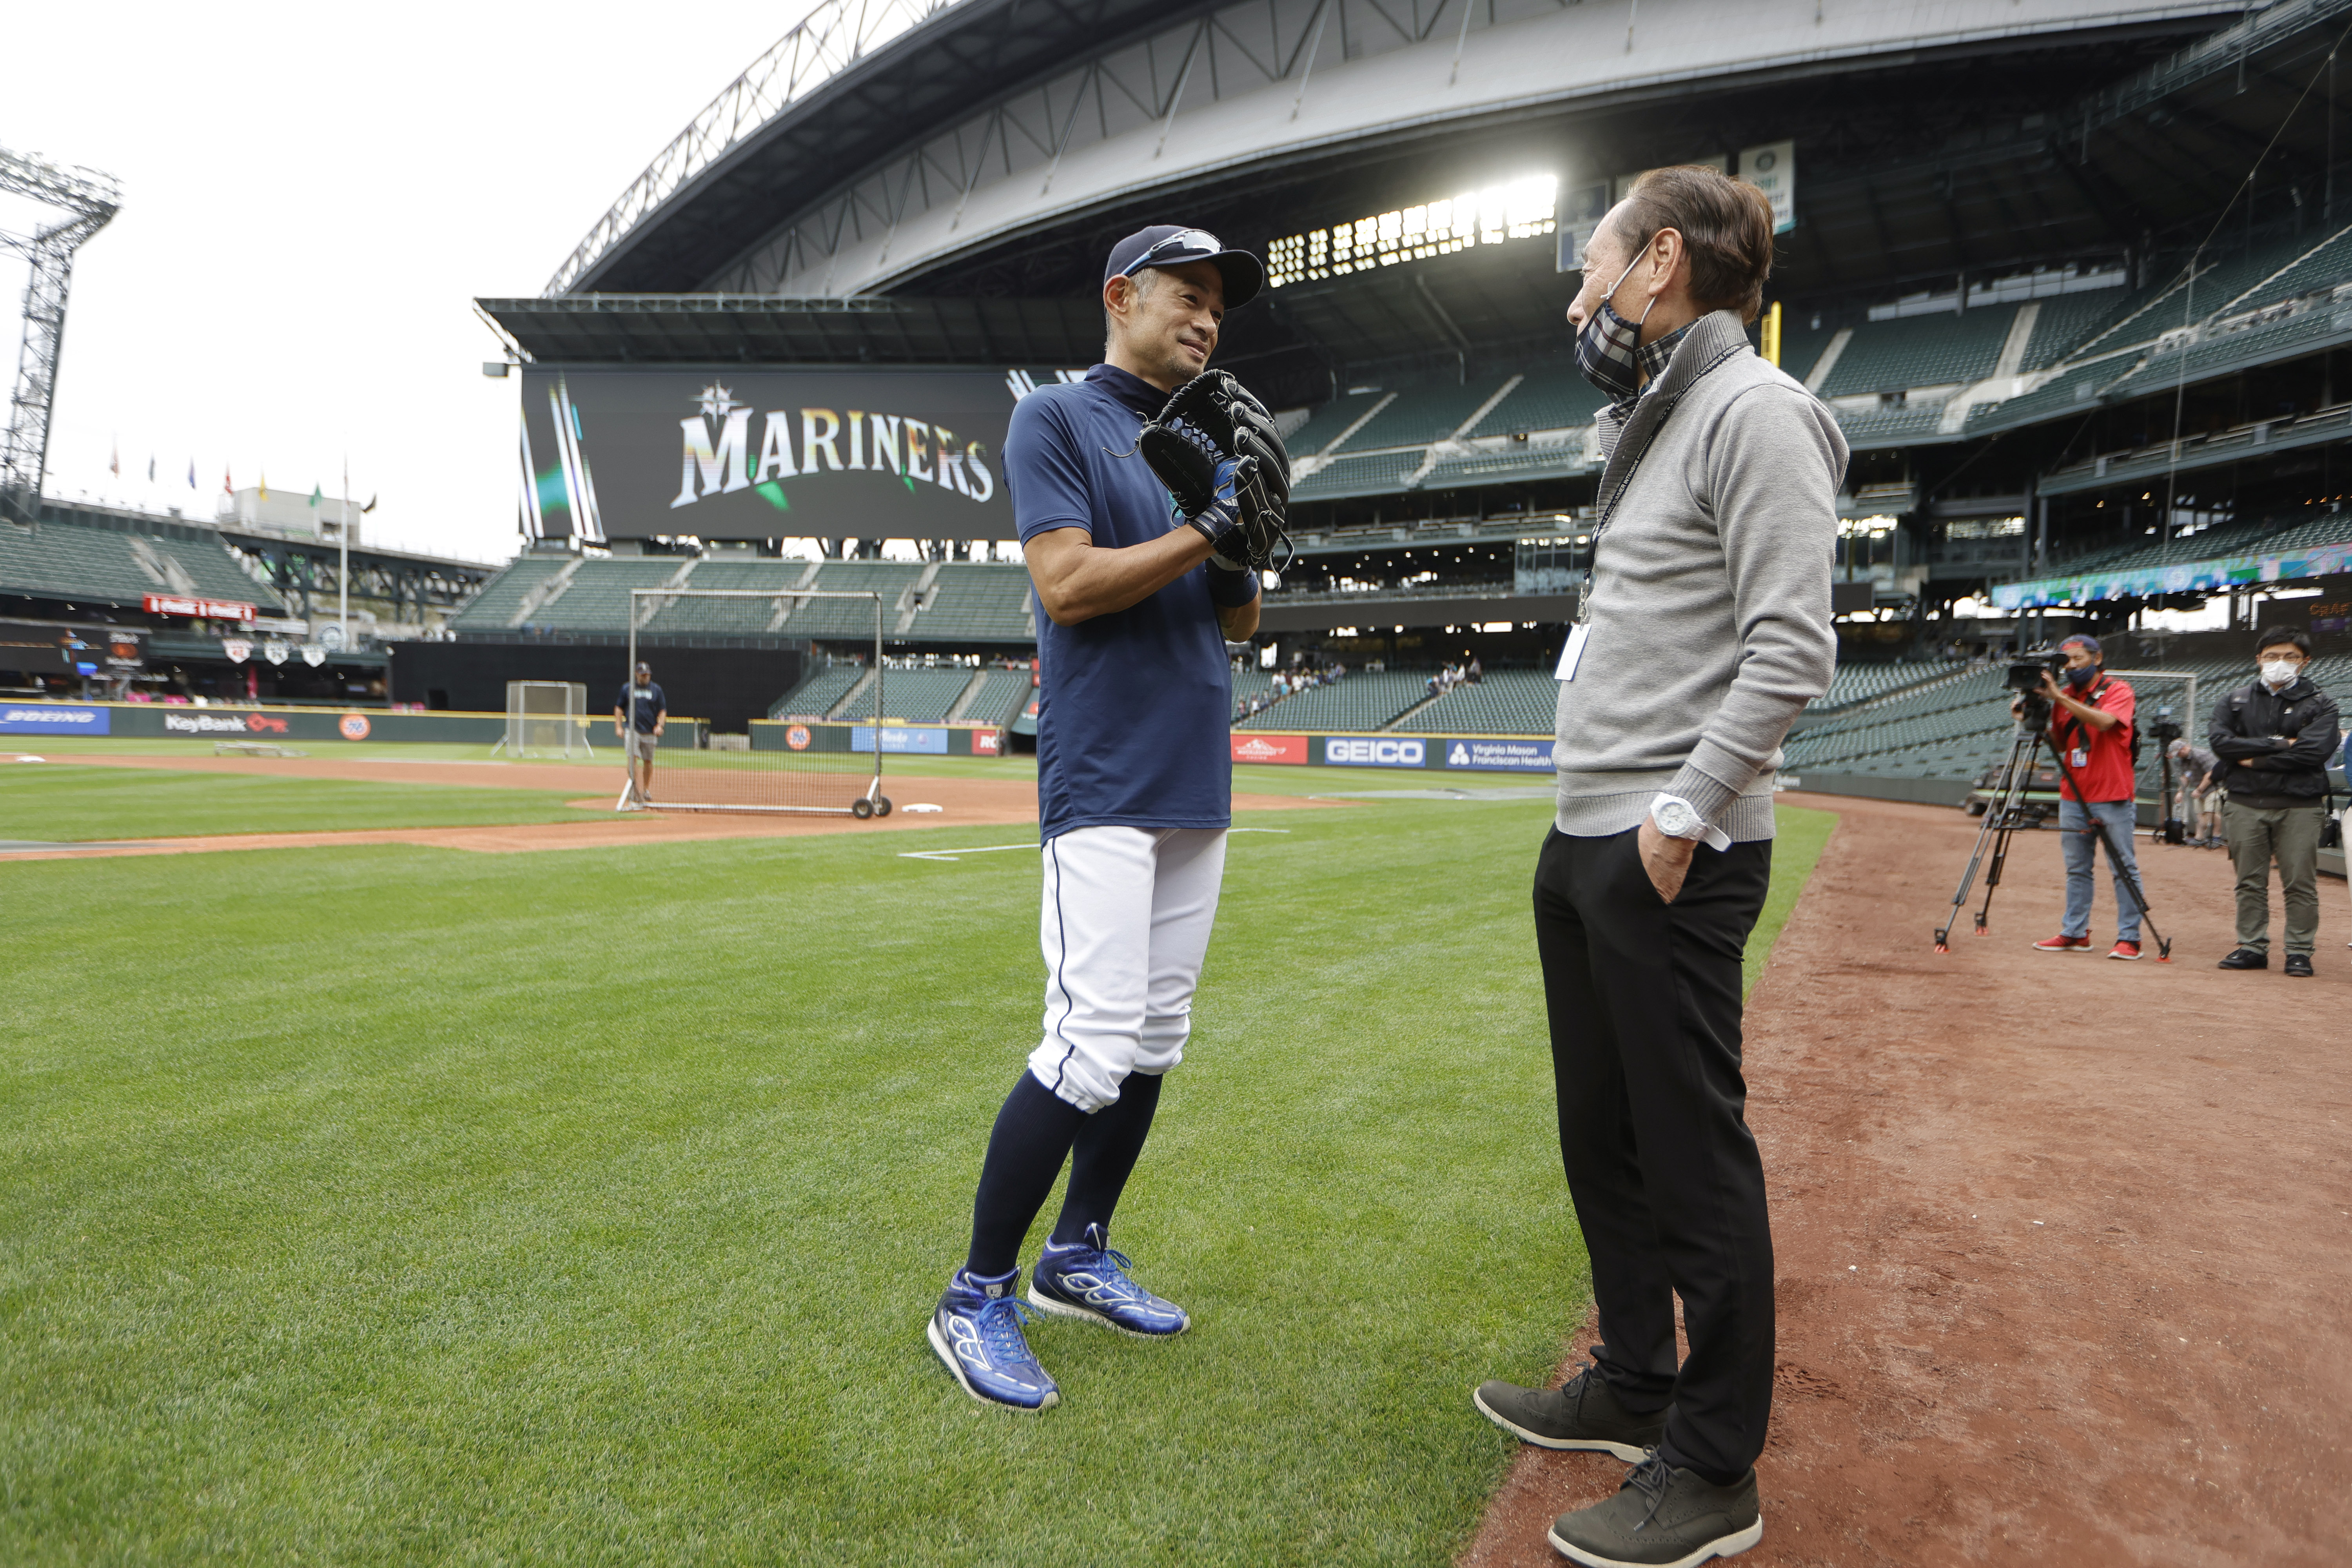 Ichiro's 'retirement' will involve wearing a uniform, batting practice 